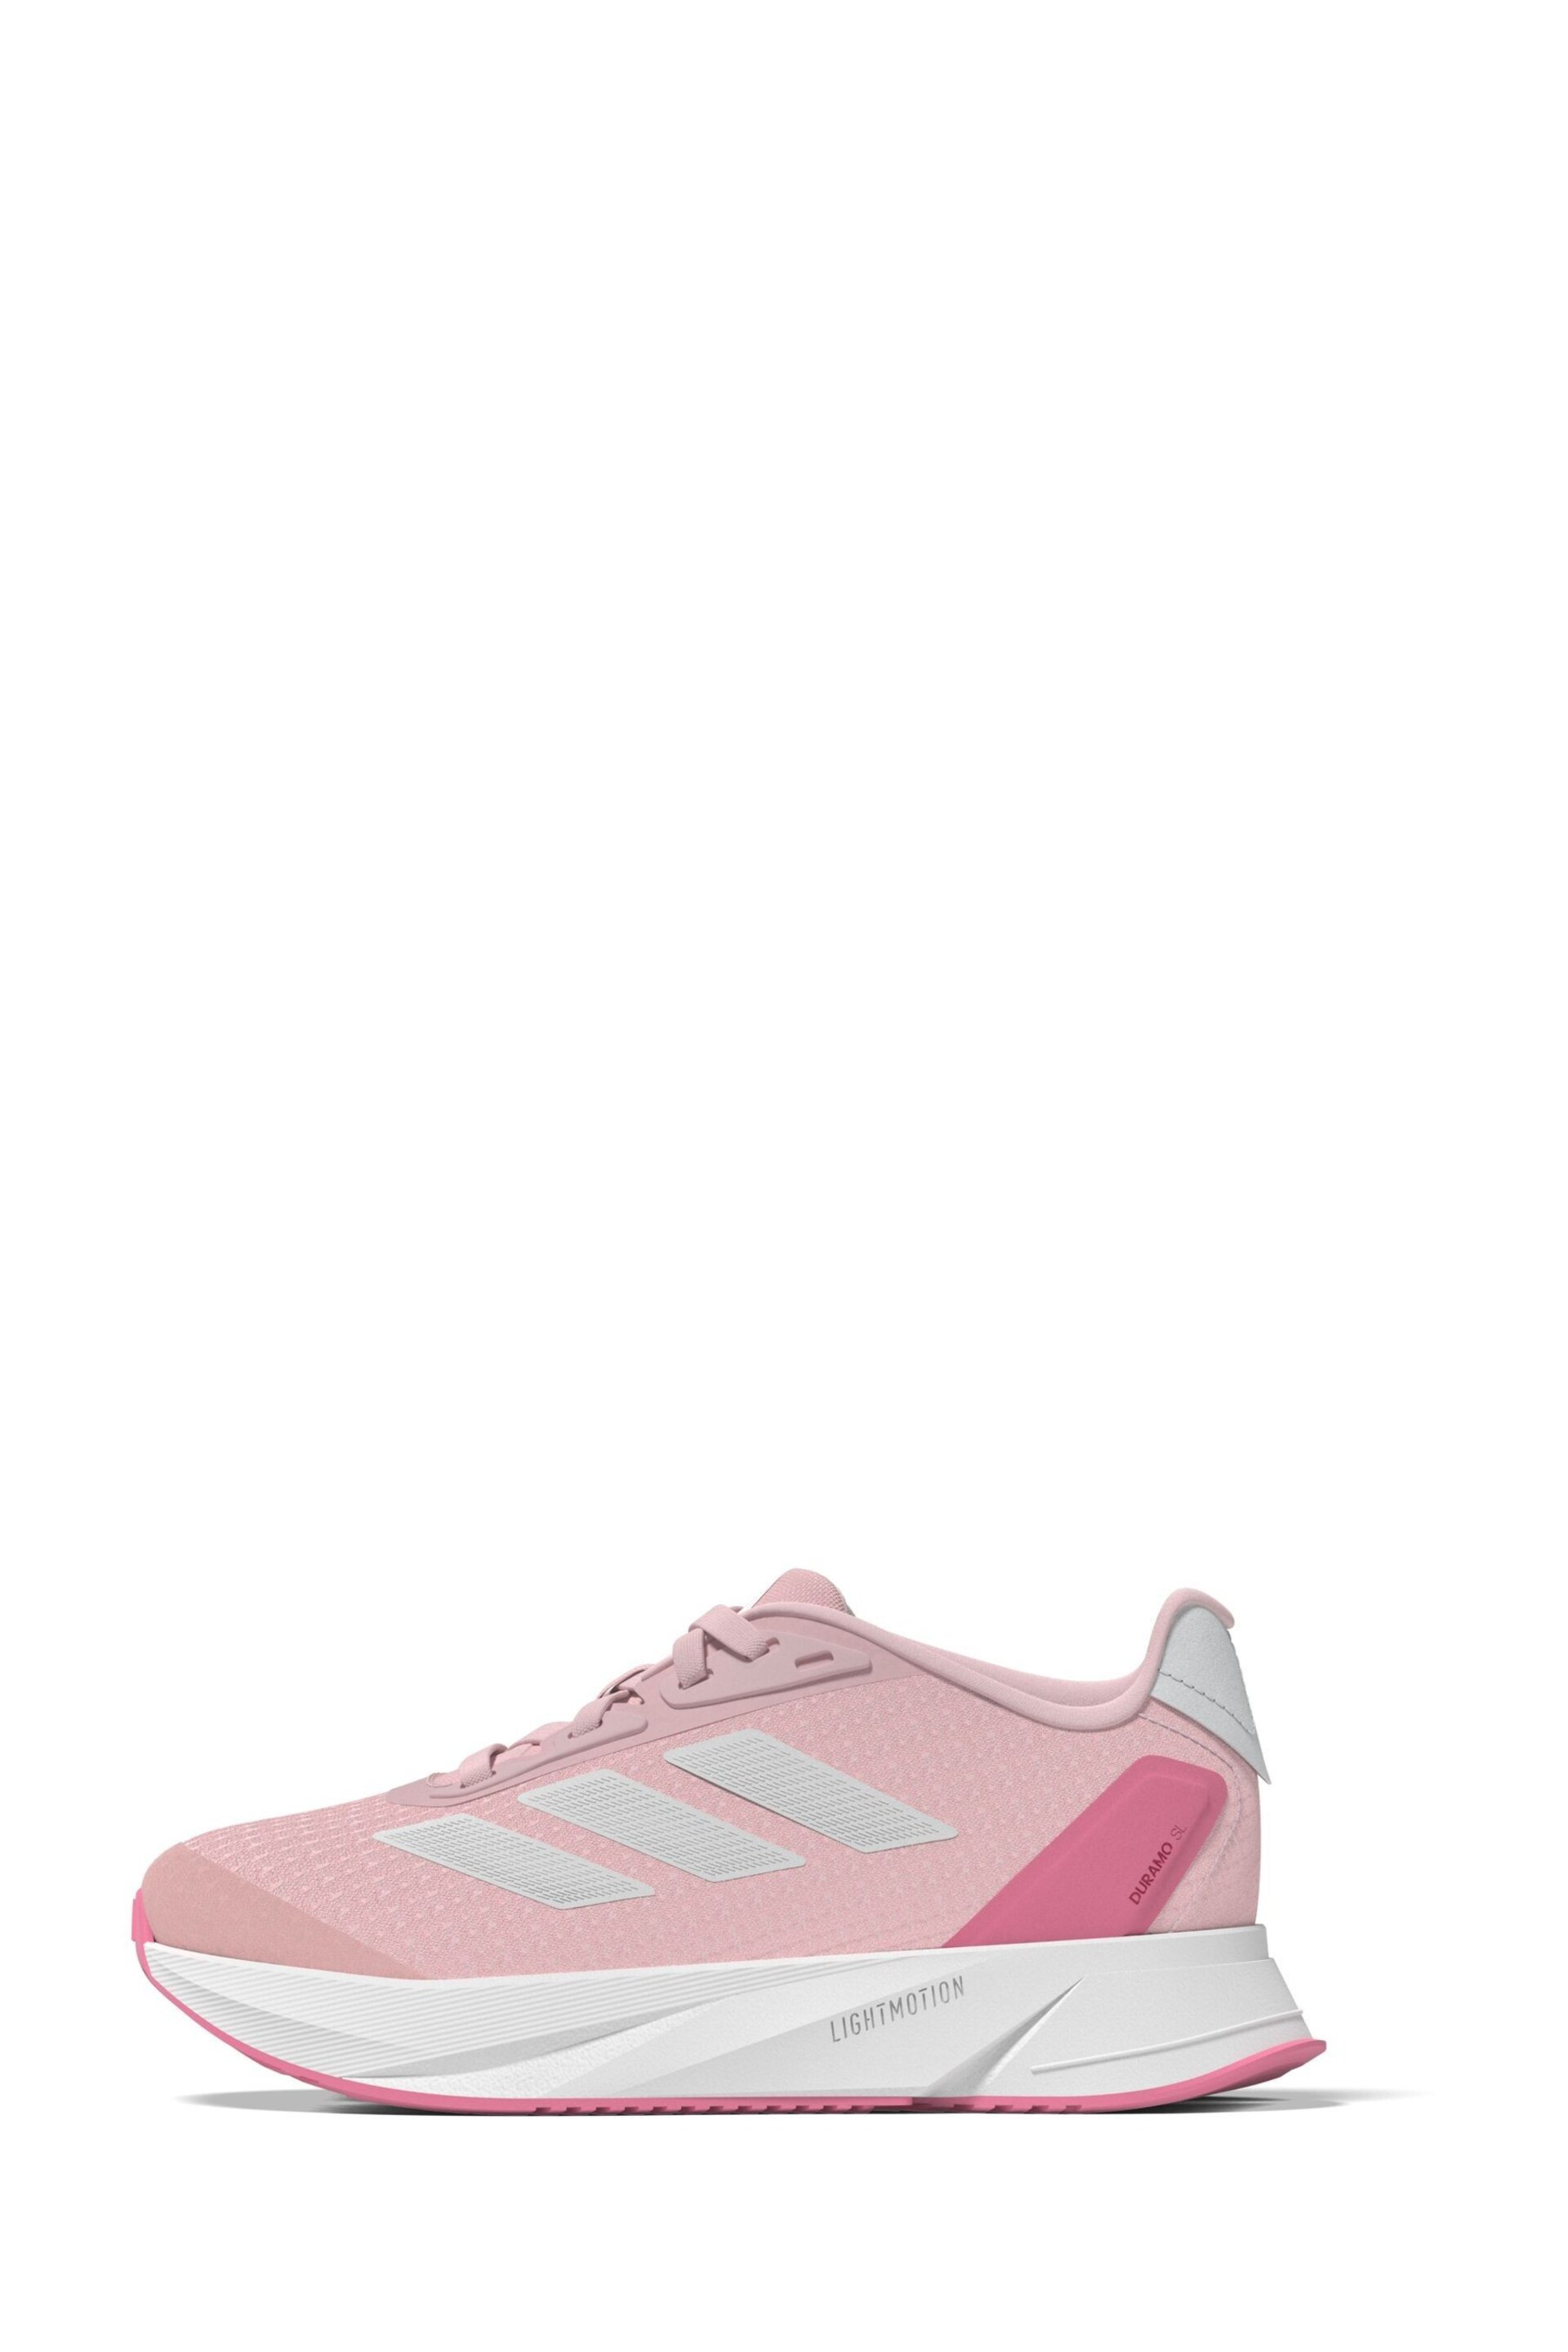 adidas Pink Kids Duramo Shoes - Image 1 of 4